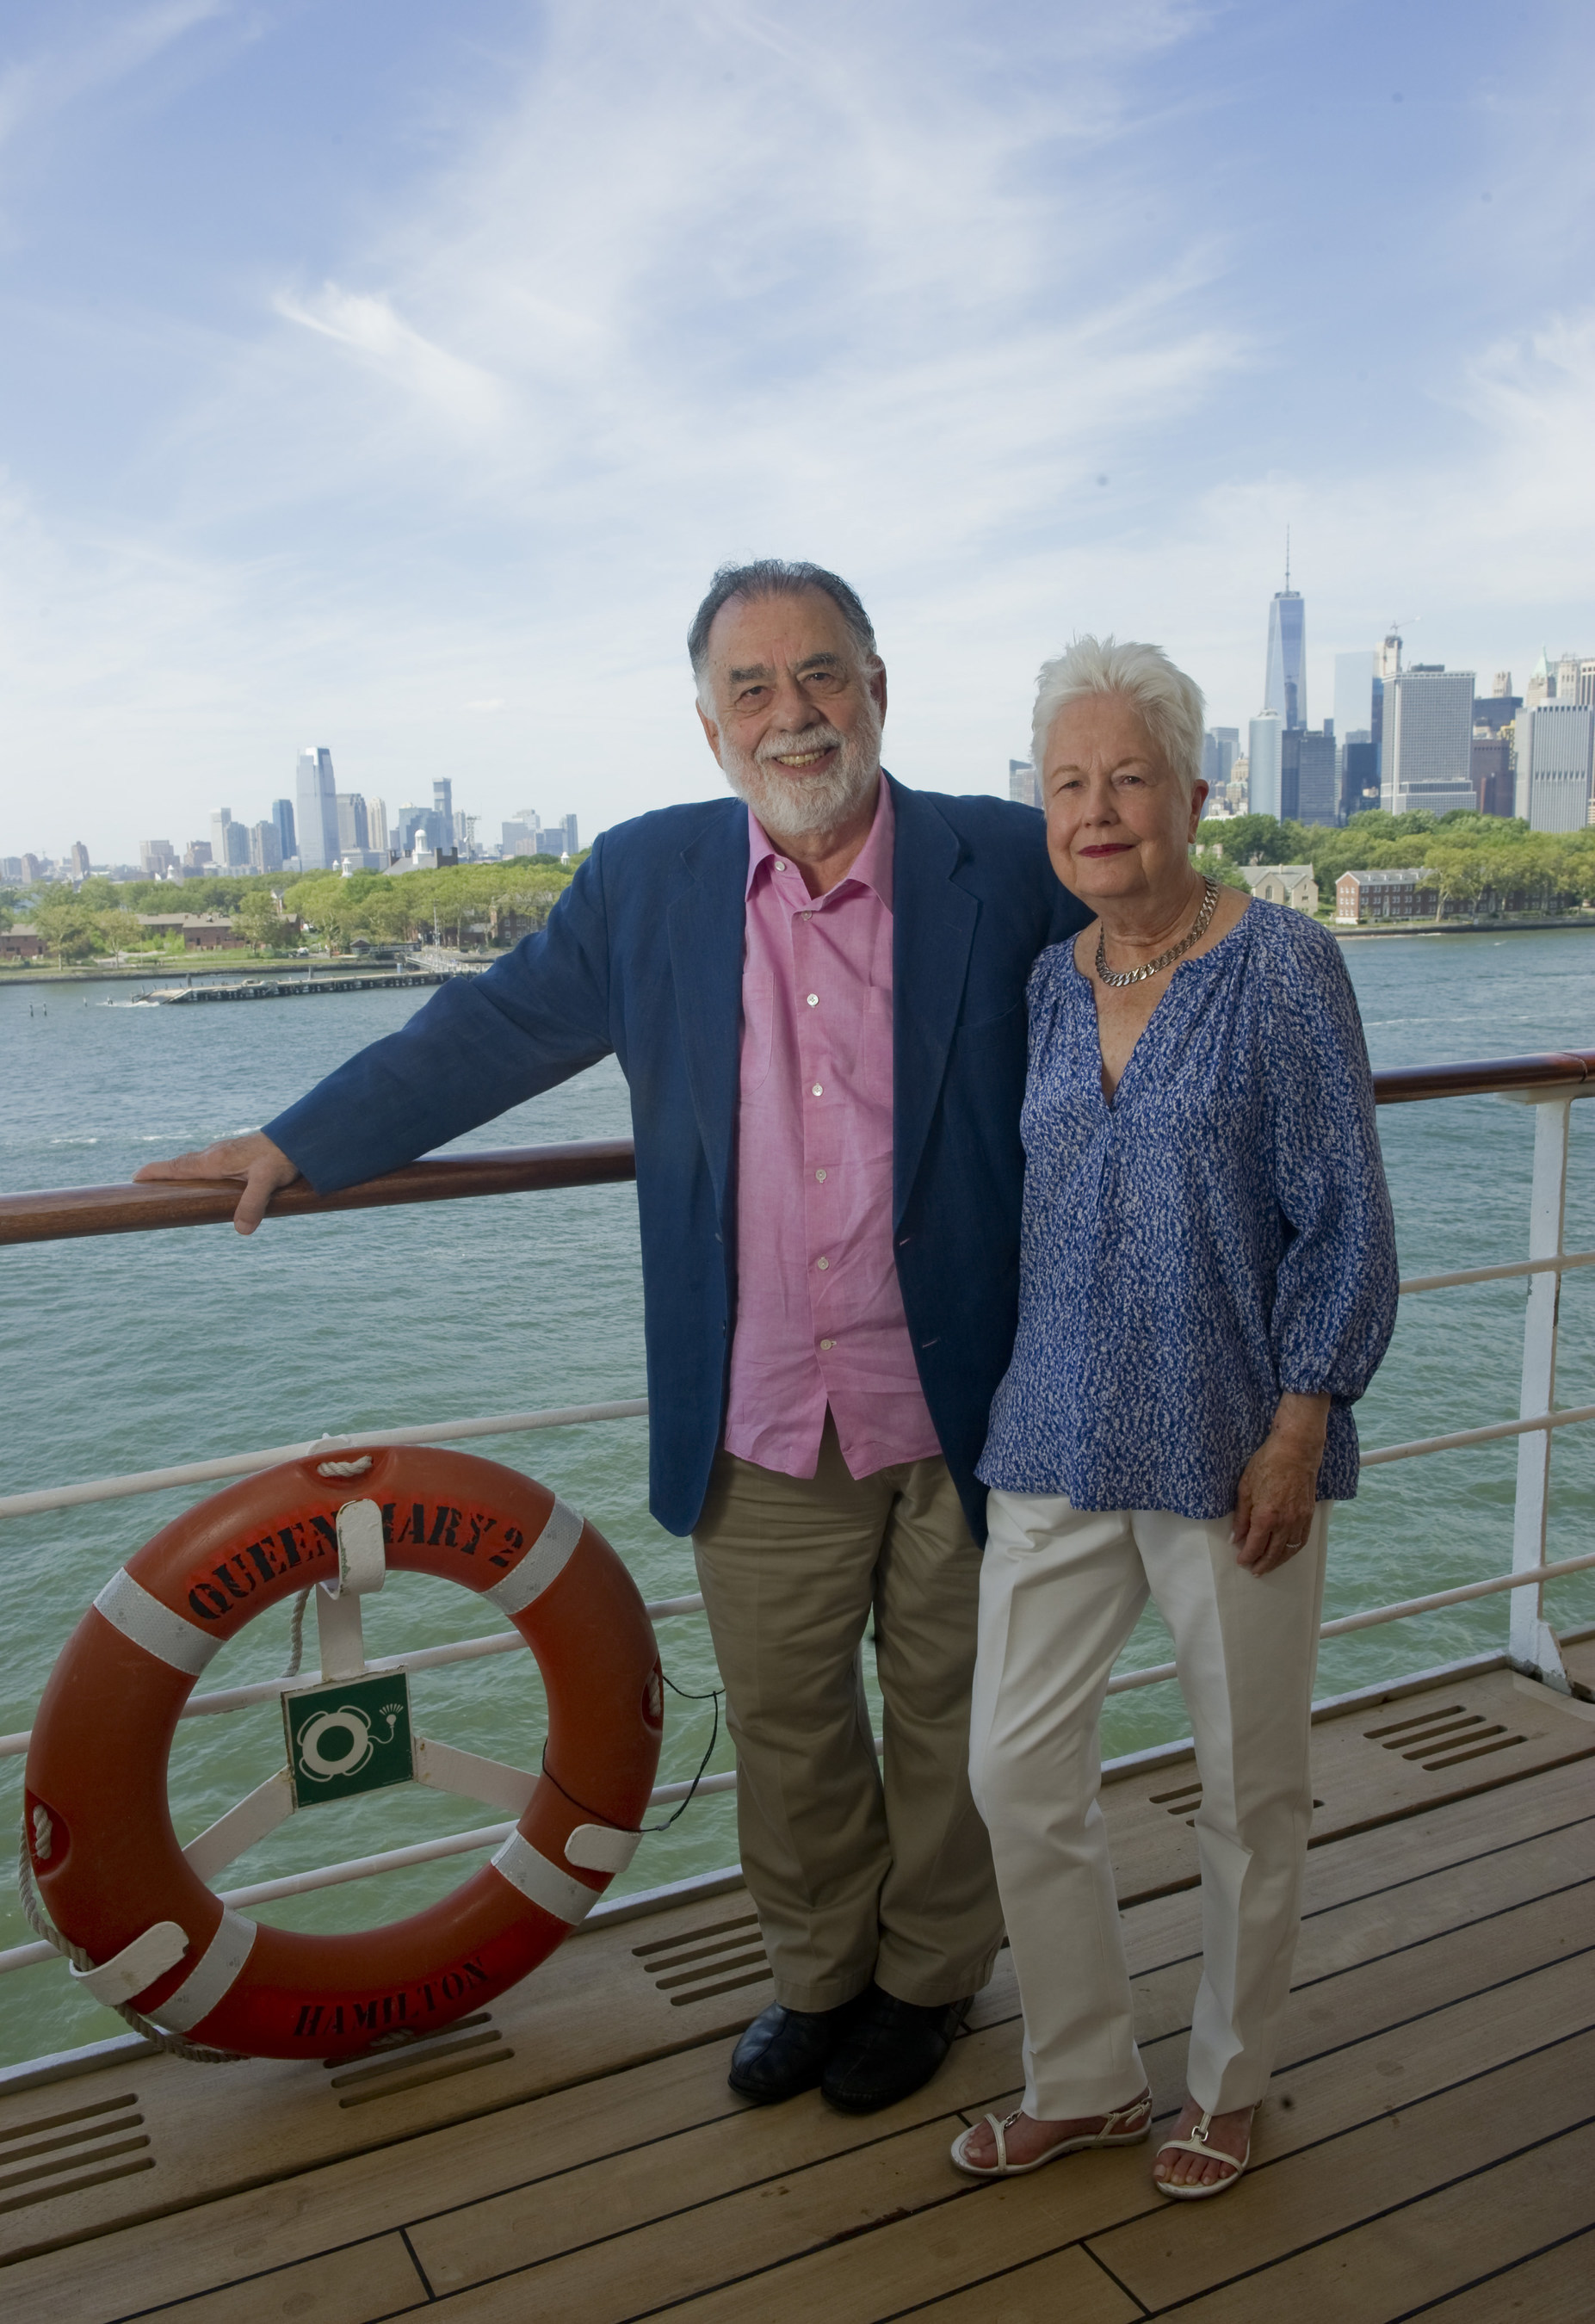 Francis Ford Coppola, left, and Elanor Coppola on Queen Mary 2 in Brooklyn, N.Y. on Sunday, Jul. 24, 2016. (Credit: Diane Bondareff)